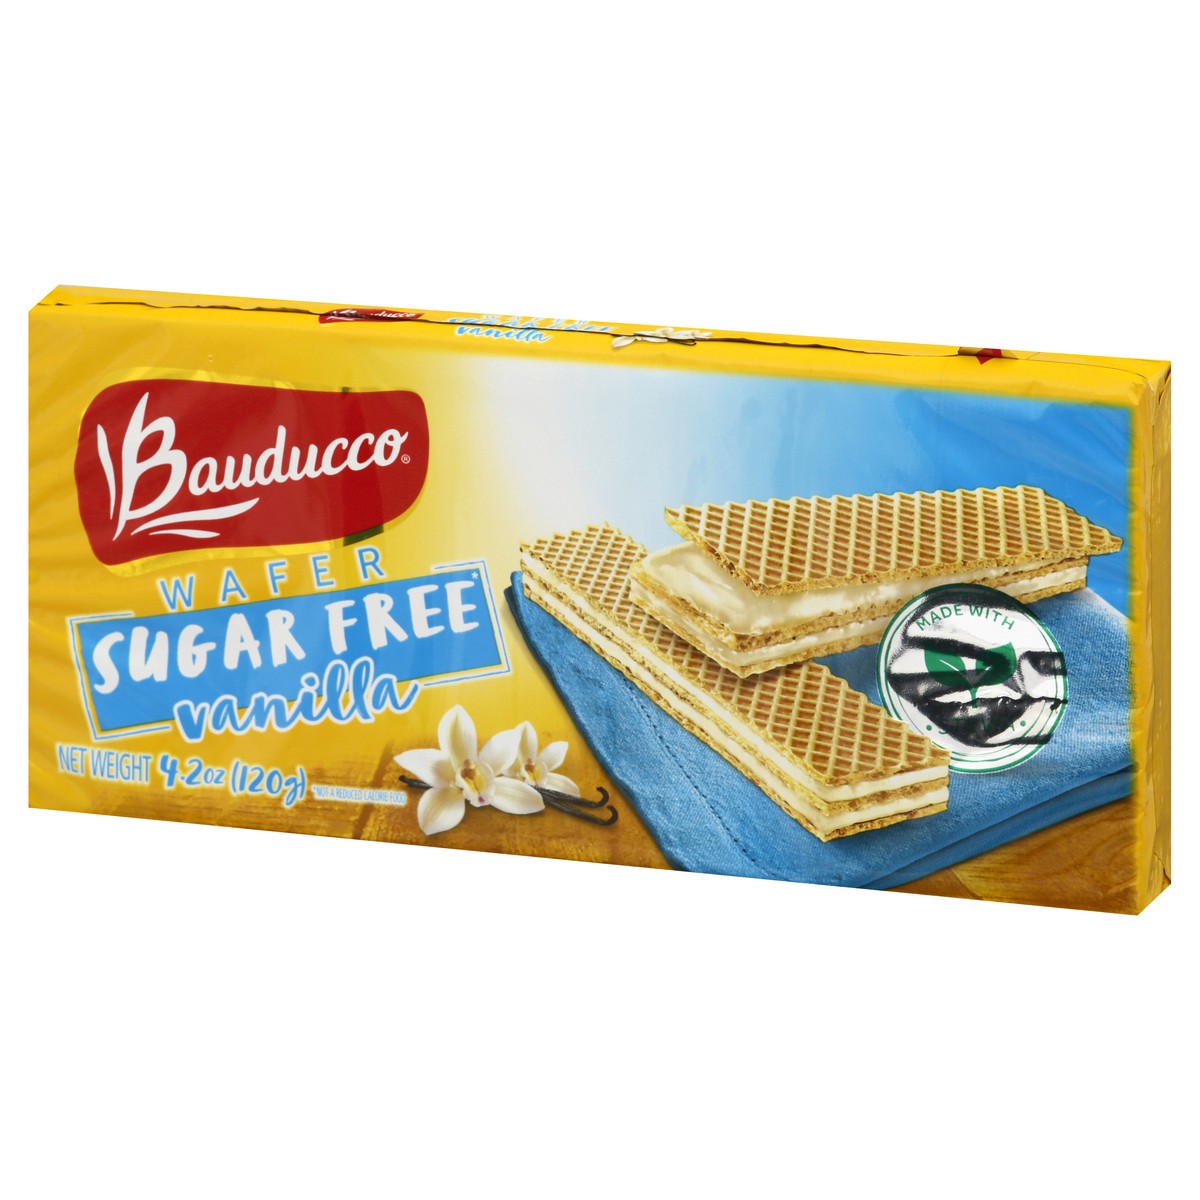 slide 3 of 9, Bauducco Sugar Free Vanilla Wafer 4.2 oz, 4.2 oz